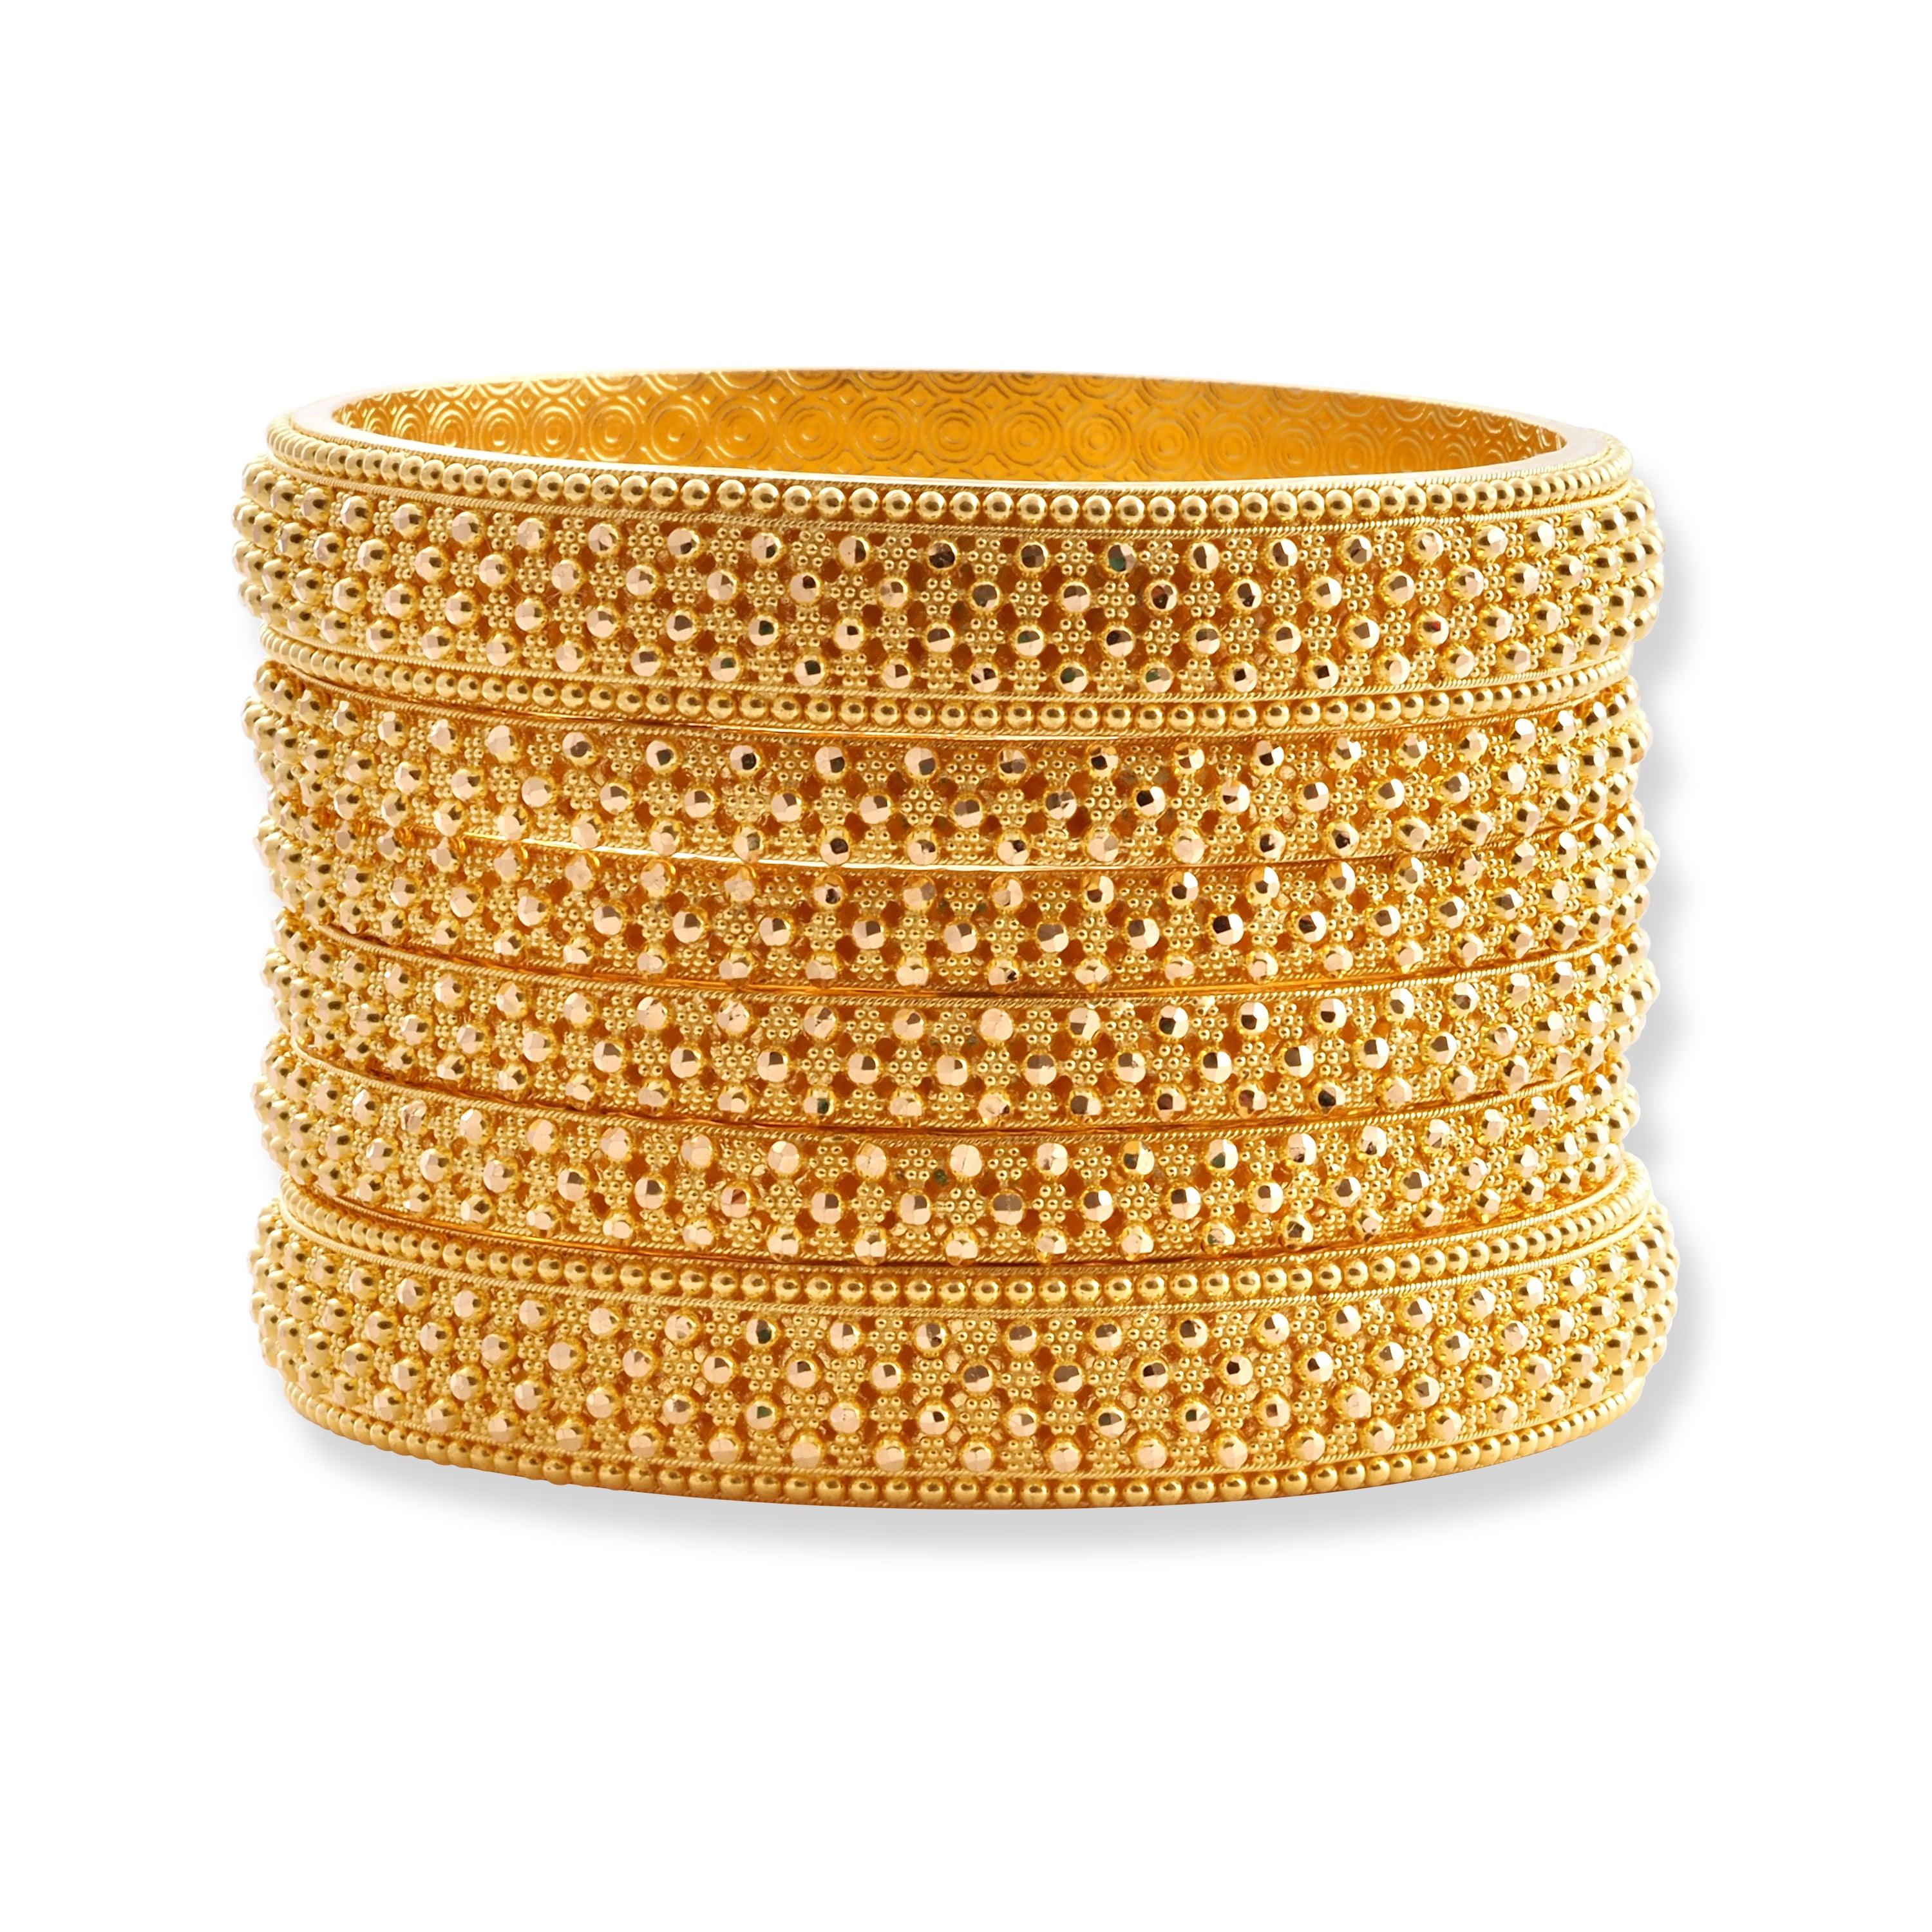 Set of Six 22ct Gold Bangles with Diamond Cut Bead Design B-8580 - Minar Jewellers